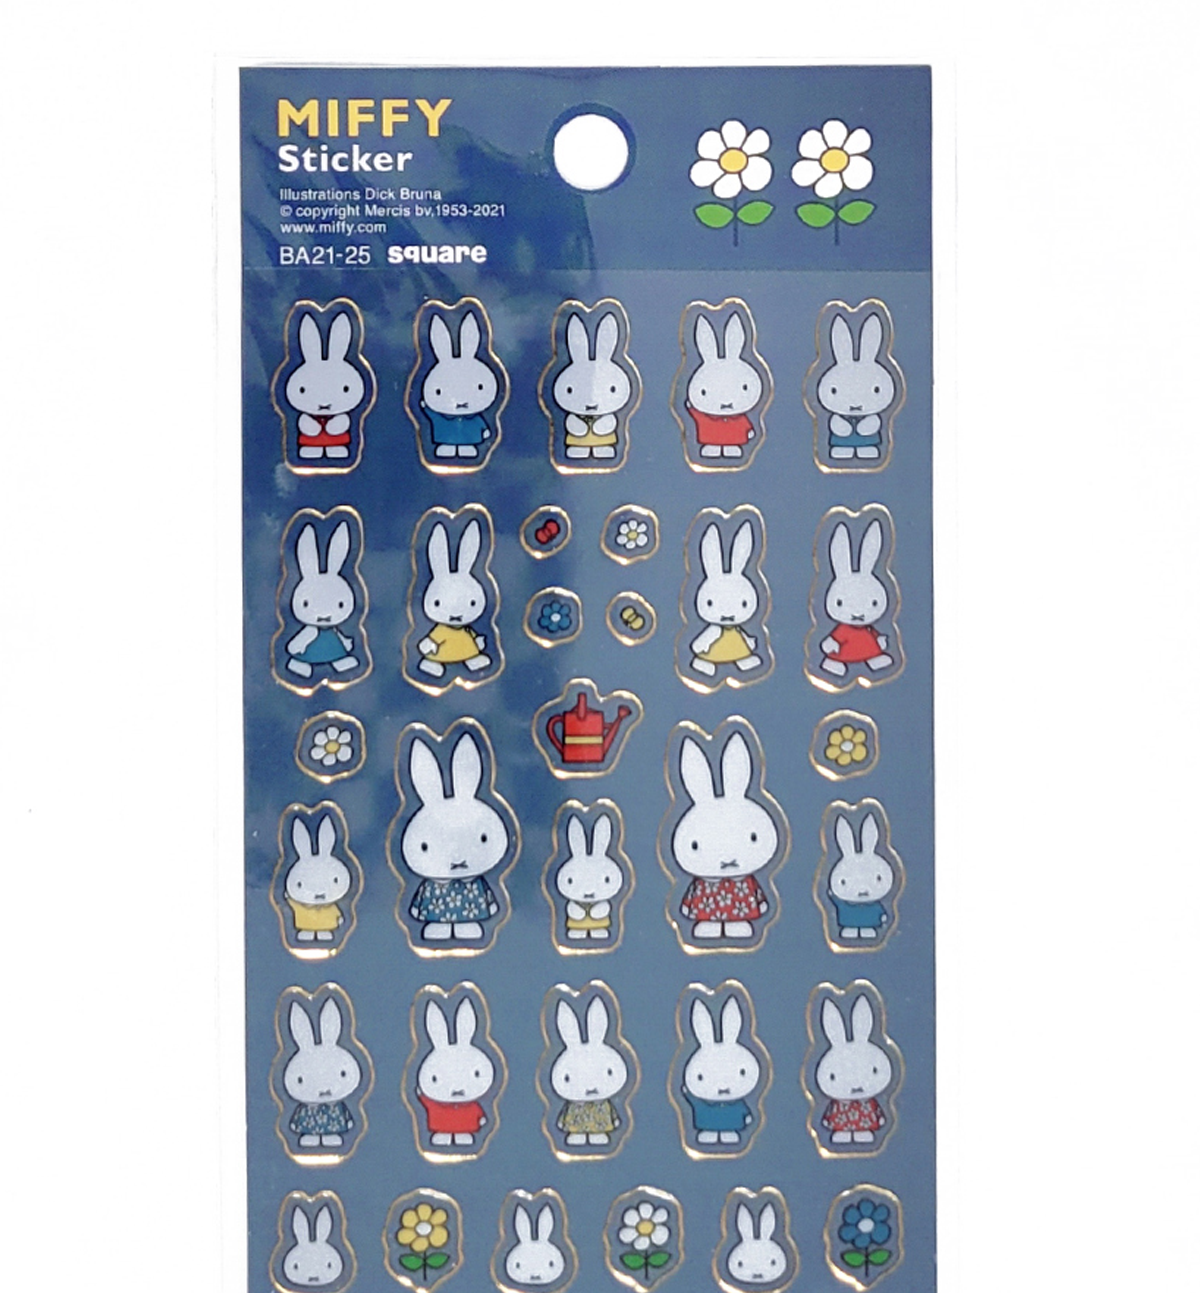 Miffy Sticker [Gold Foil - Navy]